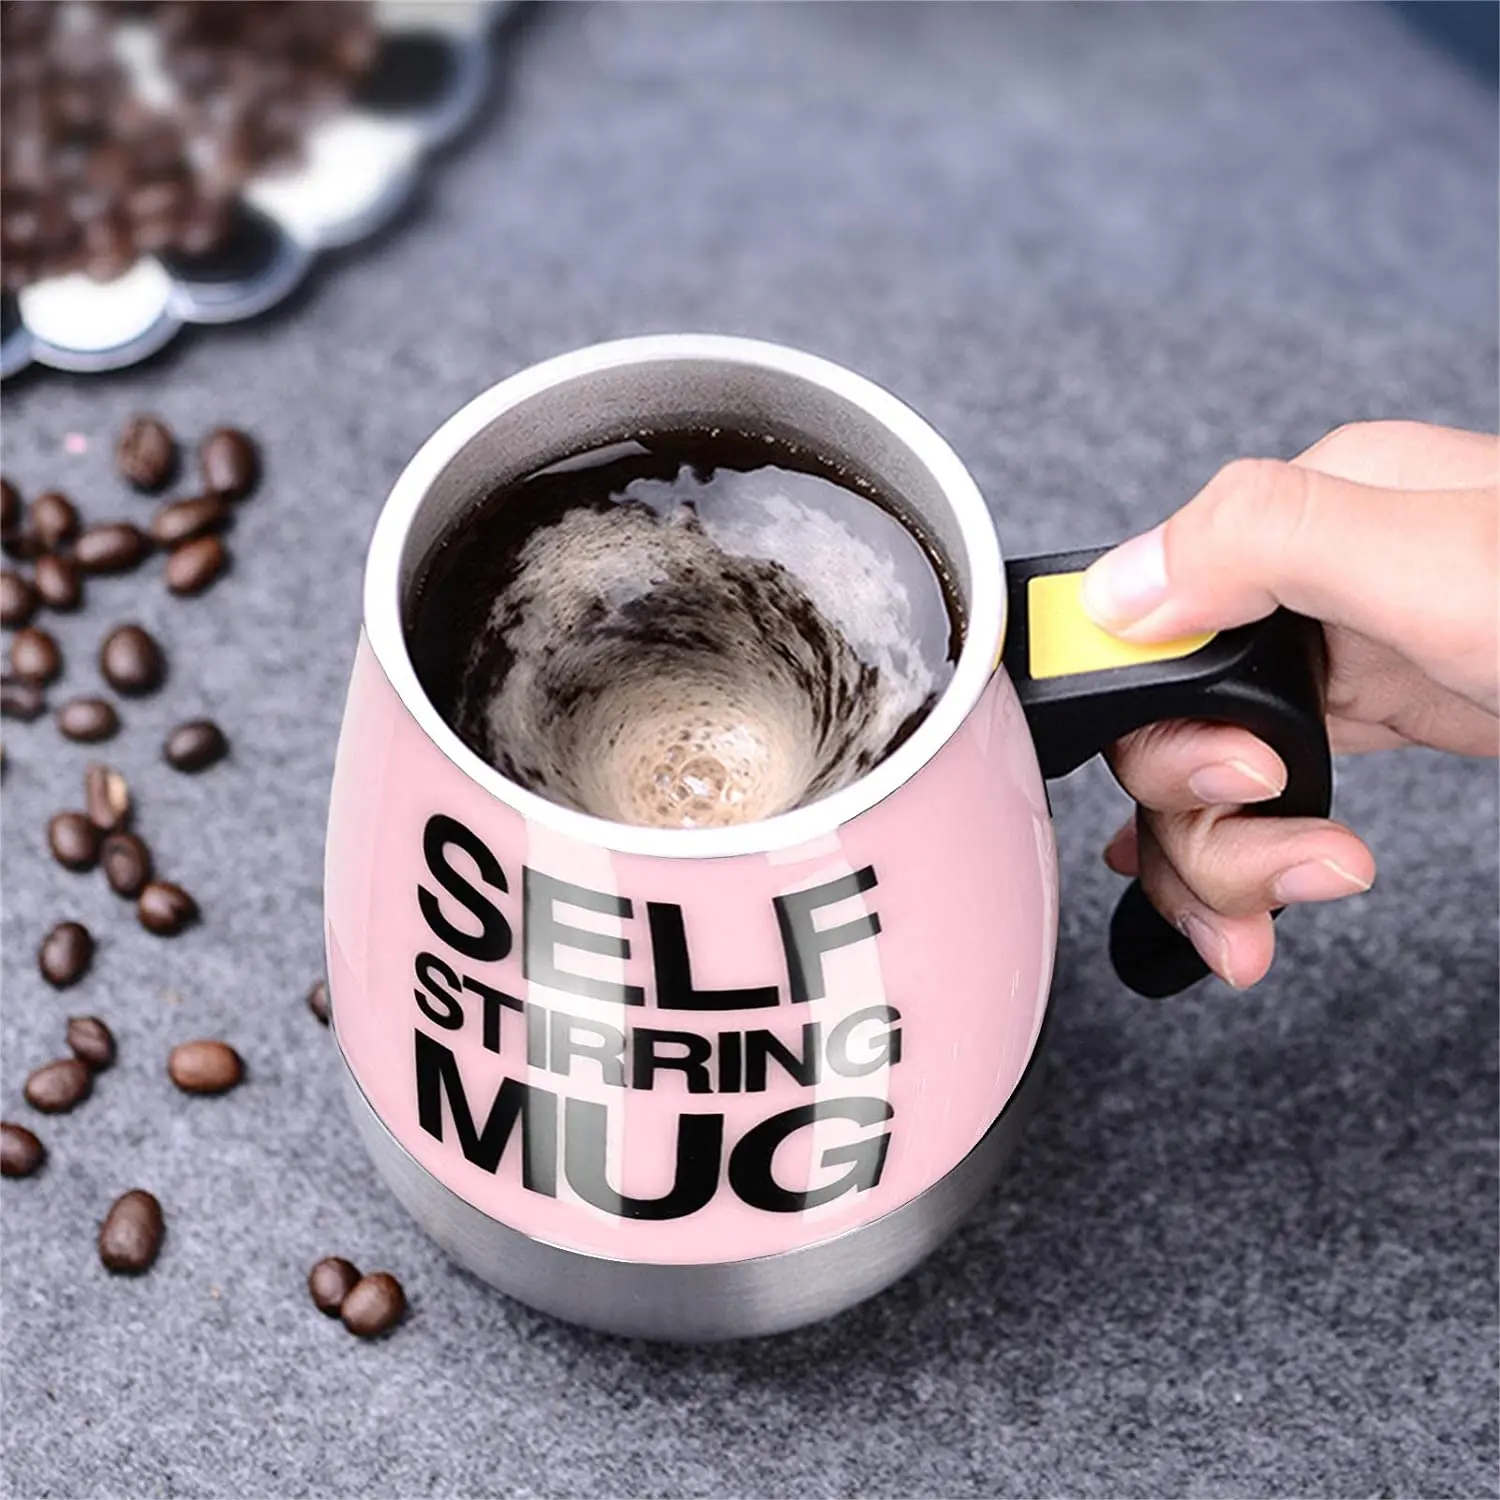 Self Stirring Electric Coffee Mug - 450ml